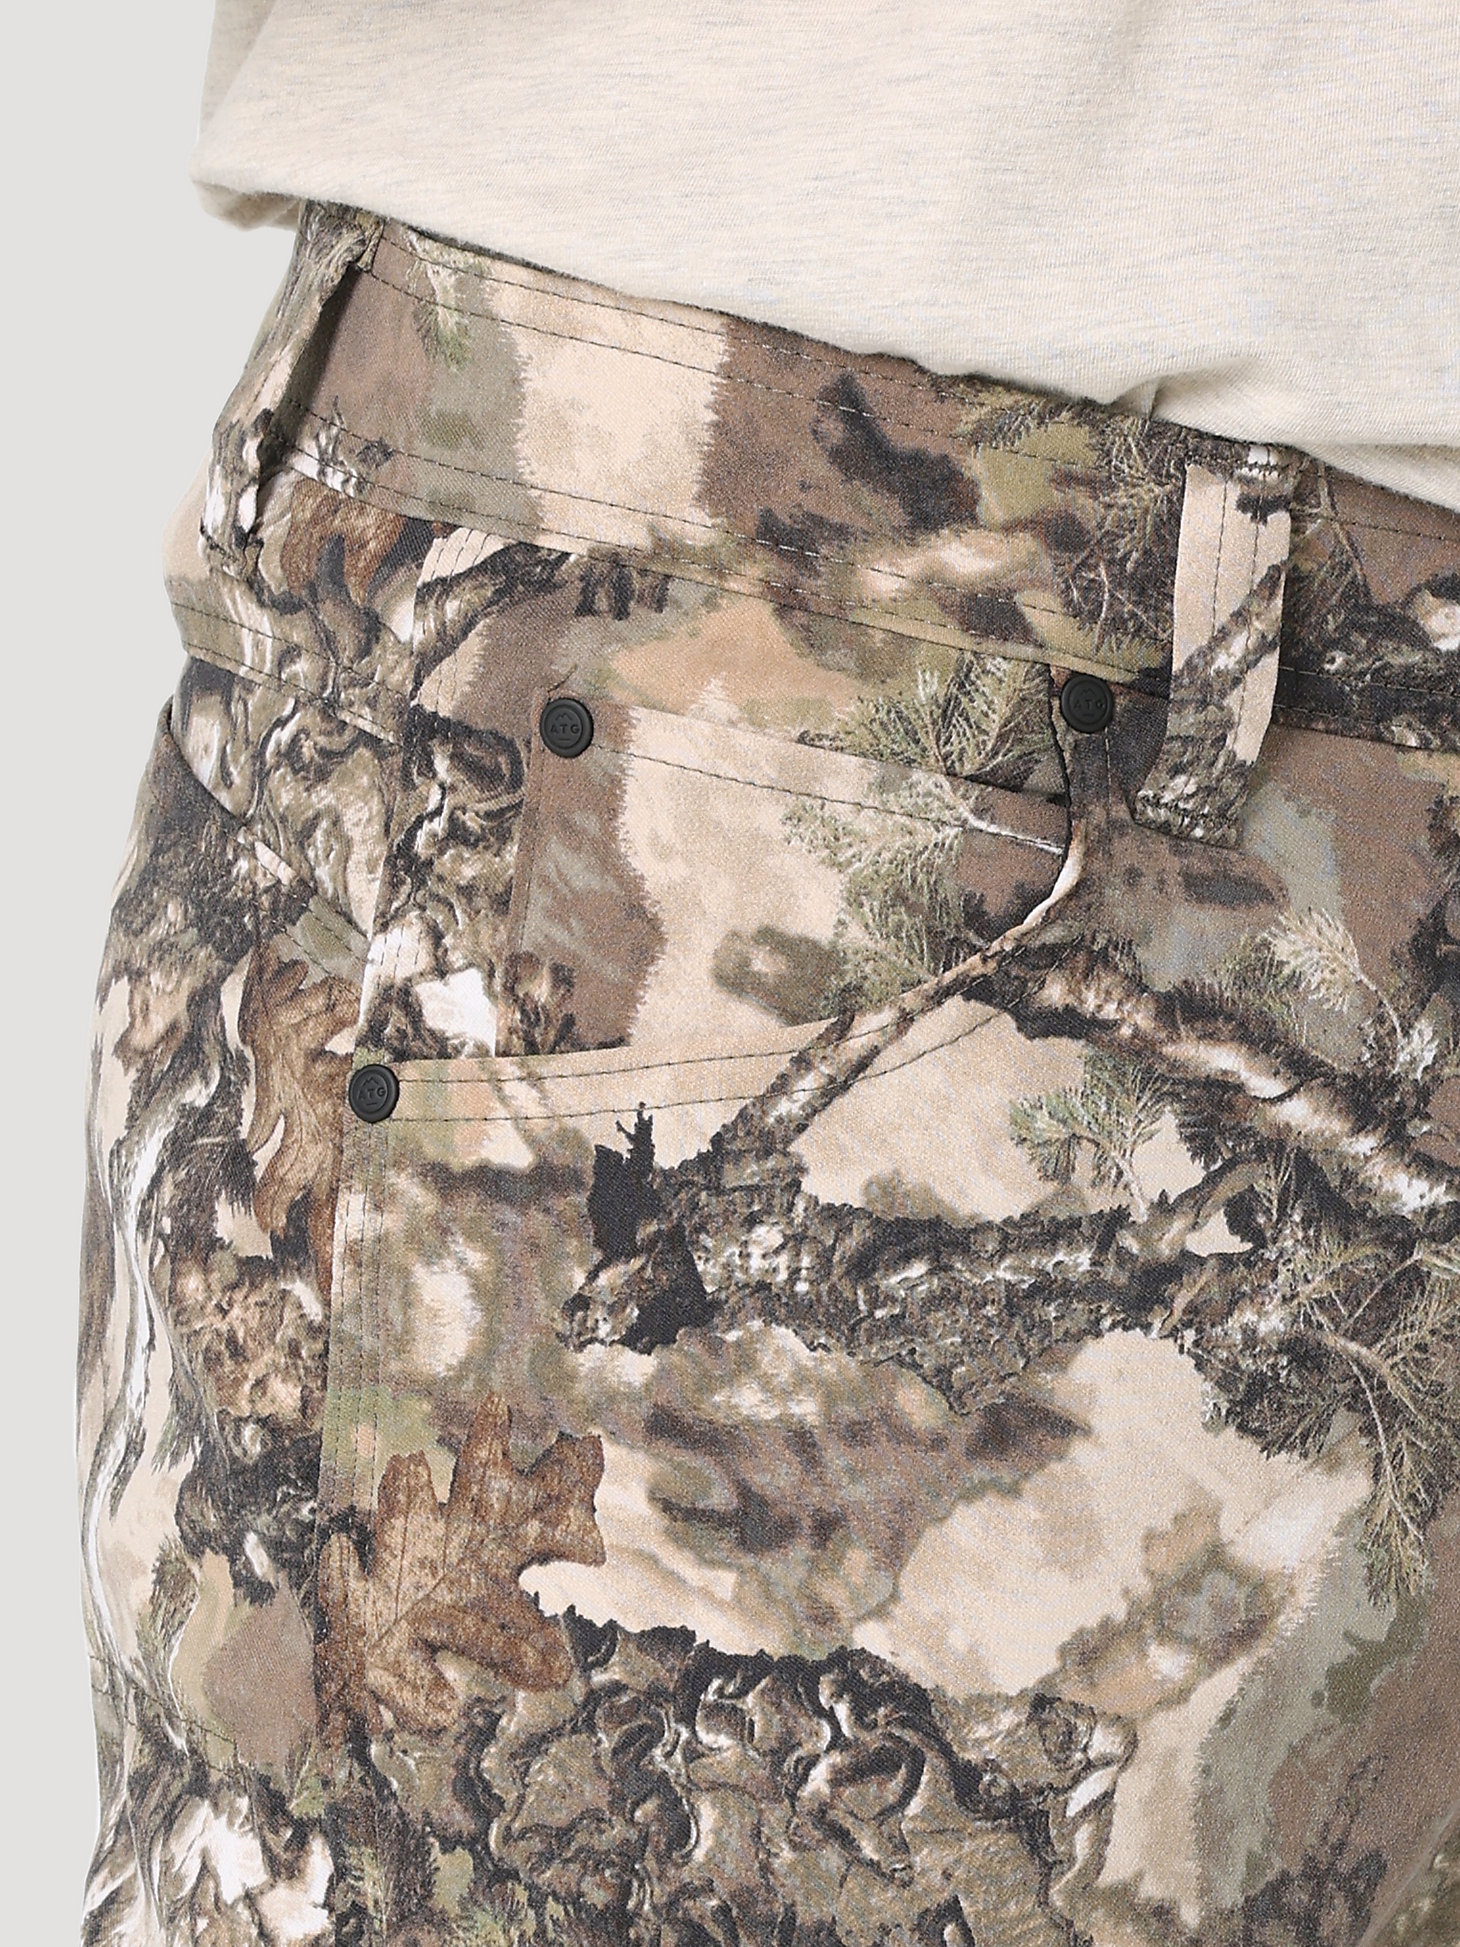 ATG Hunter™ Men's Fleece Lined Utility Pant in Warmwoods Camo alternative view 7